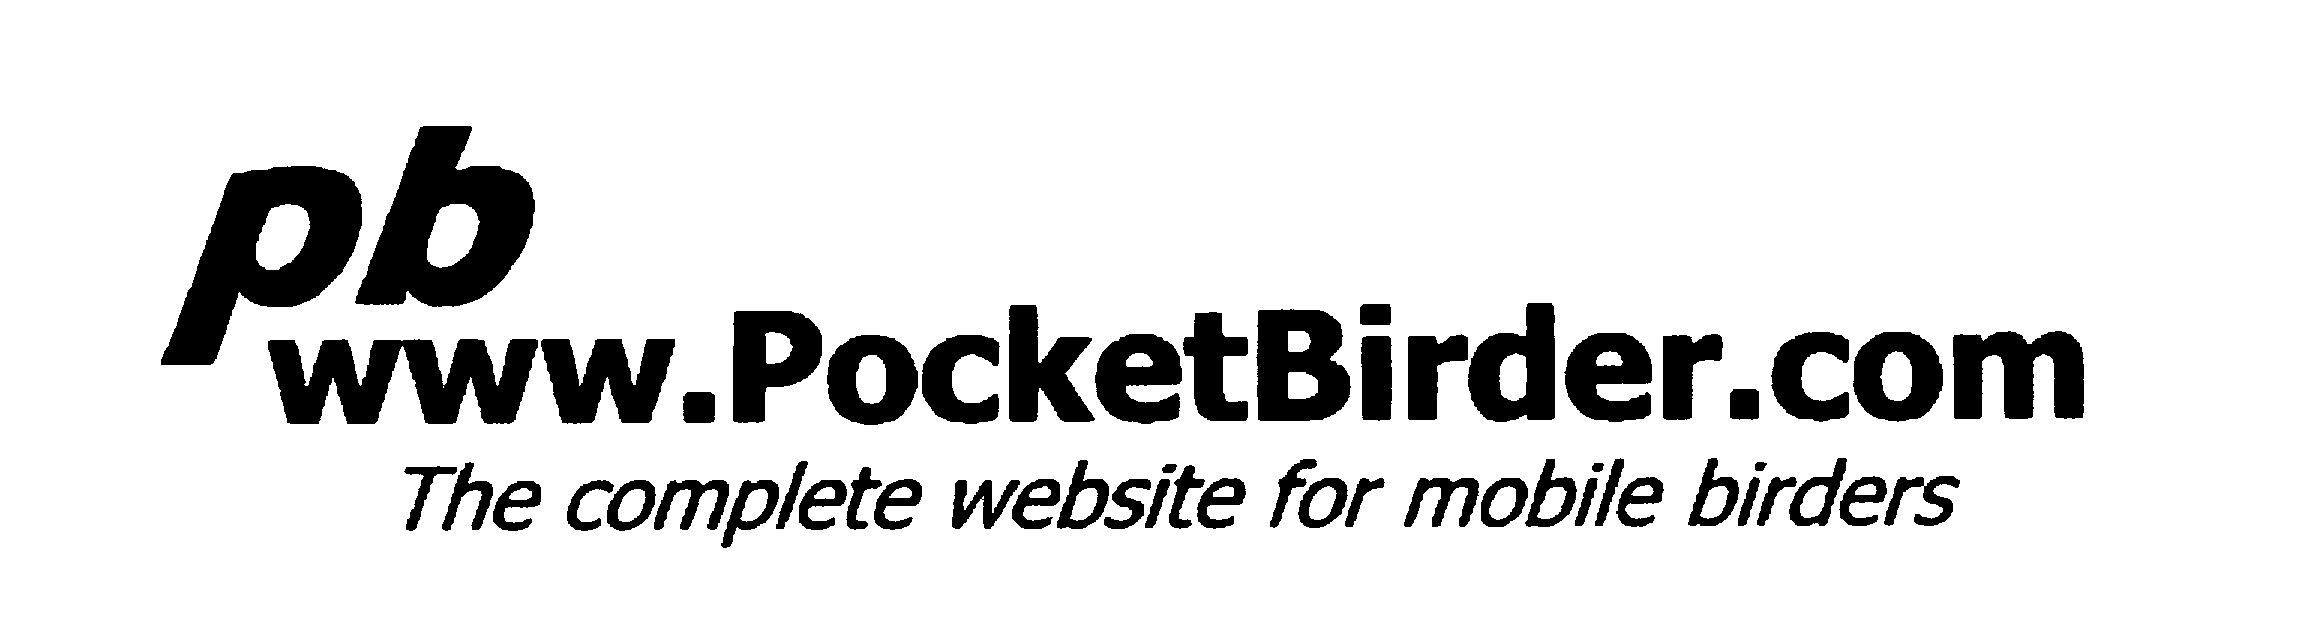  PB WWW. POCKETBIRDER.COM THE COMPLETE WEBSITE FOR MOBILE BIRDERS